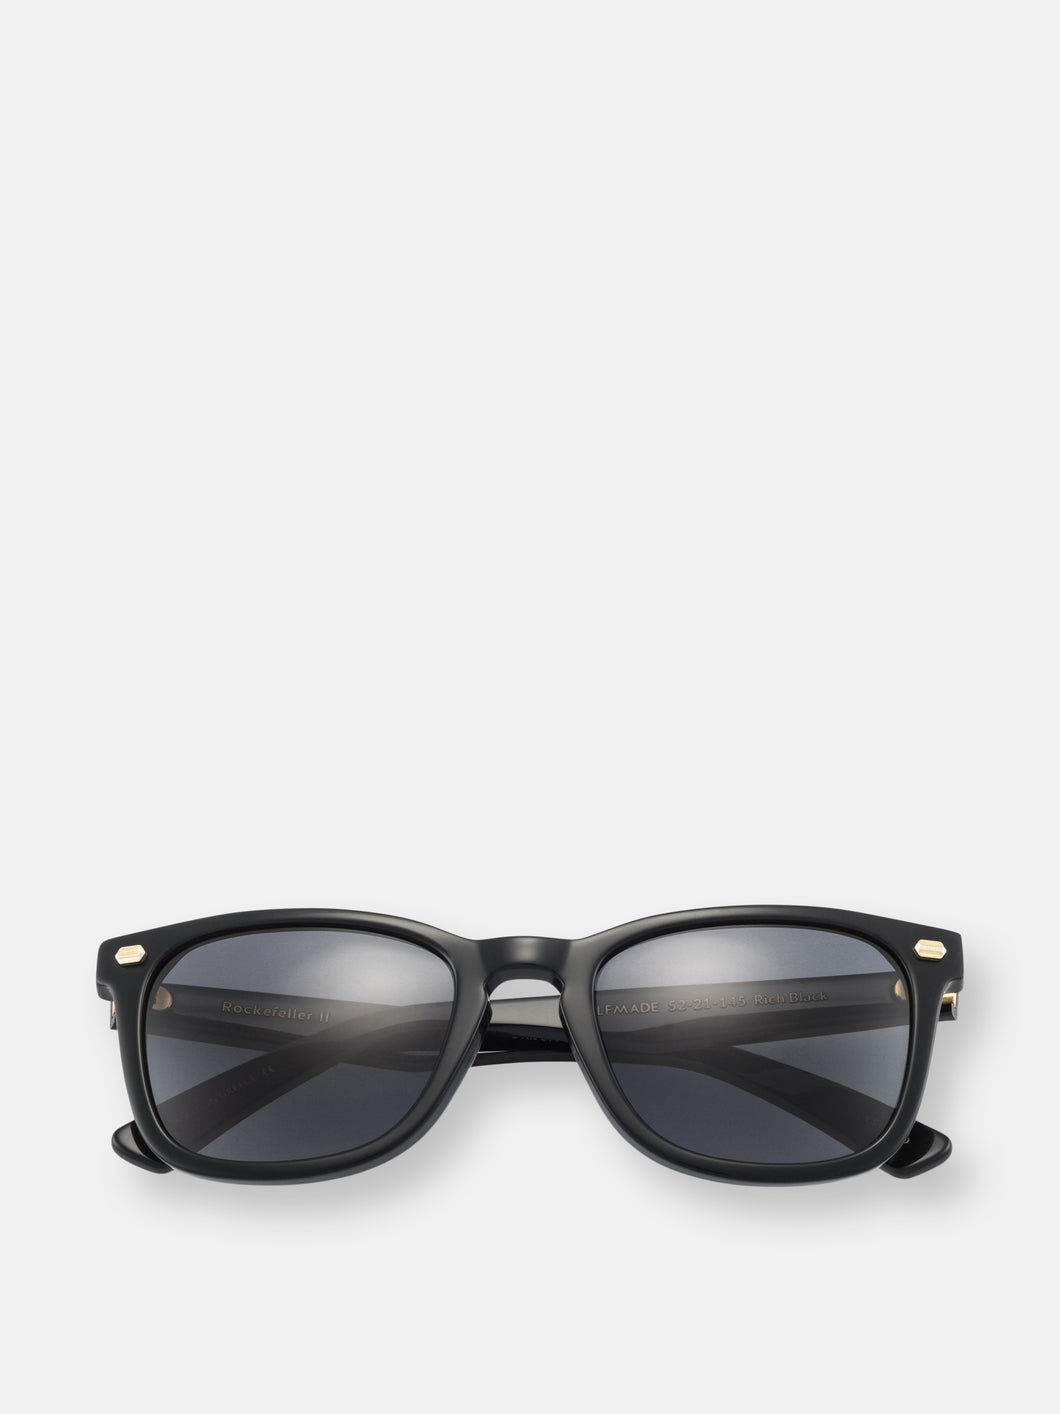 Rockefeller II Sunglasses